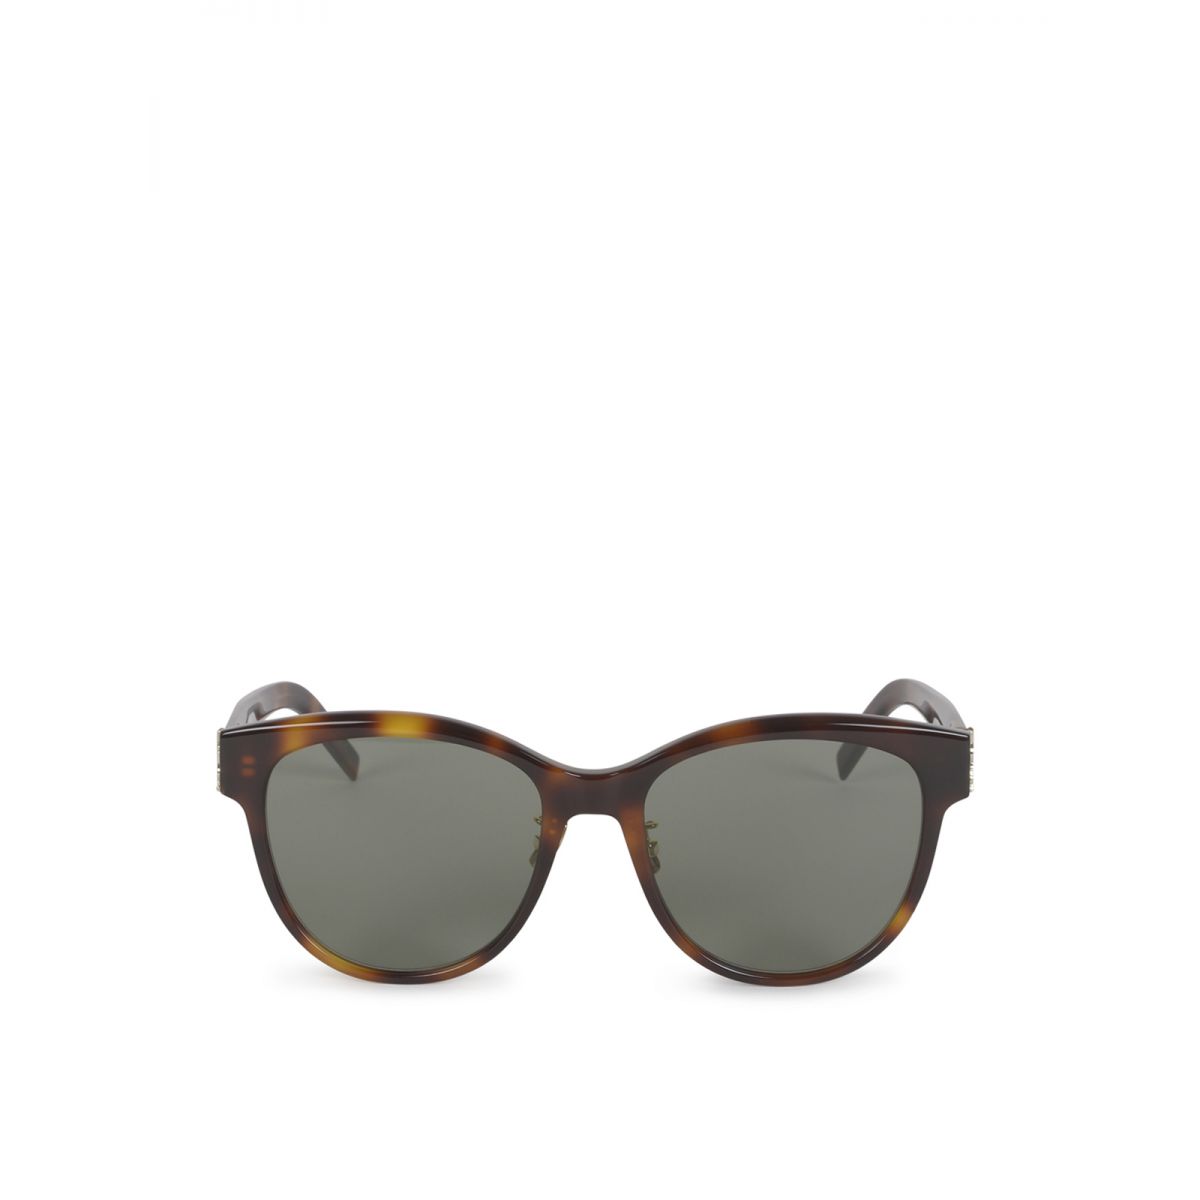 SAINT LAURENT - Tortoise shell sunglasses